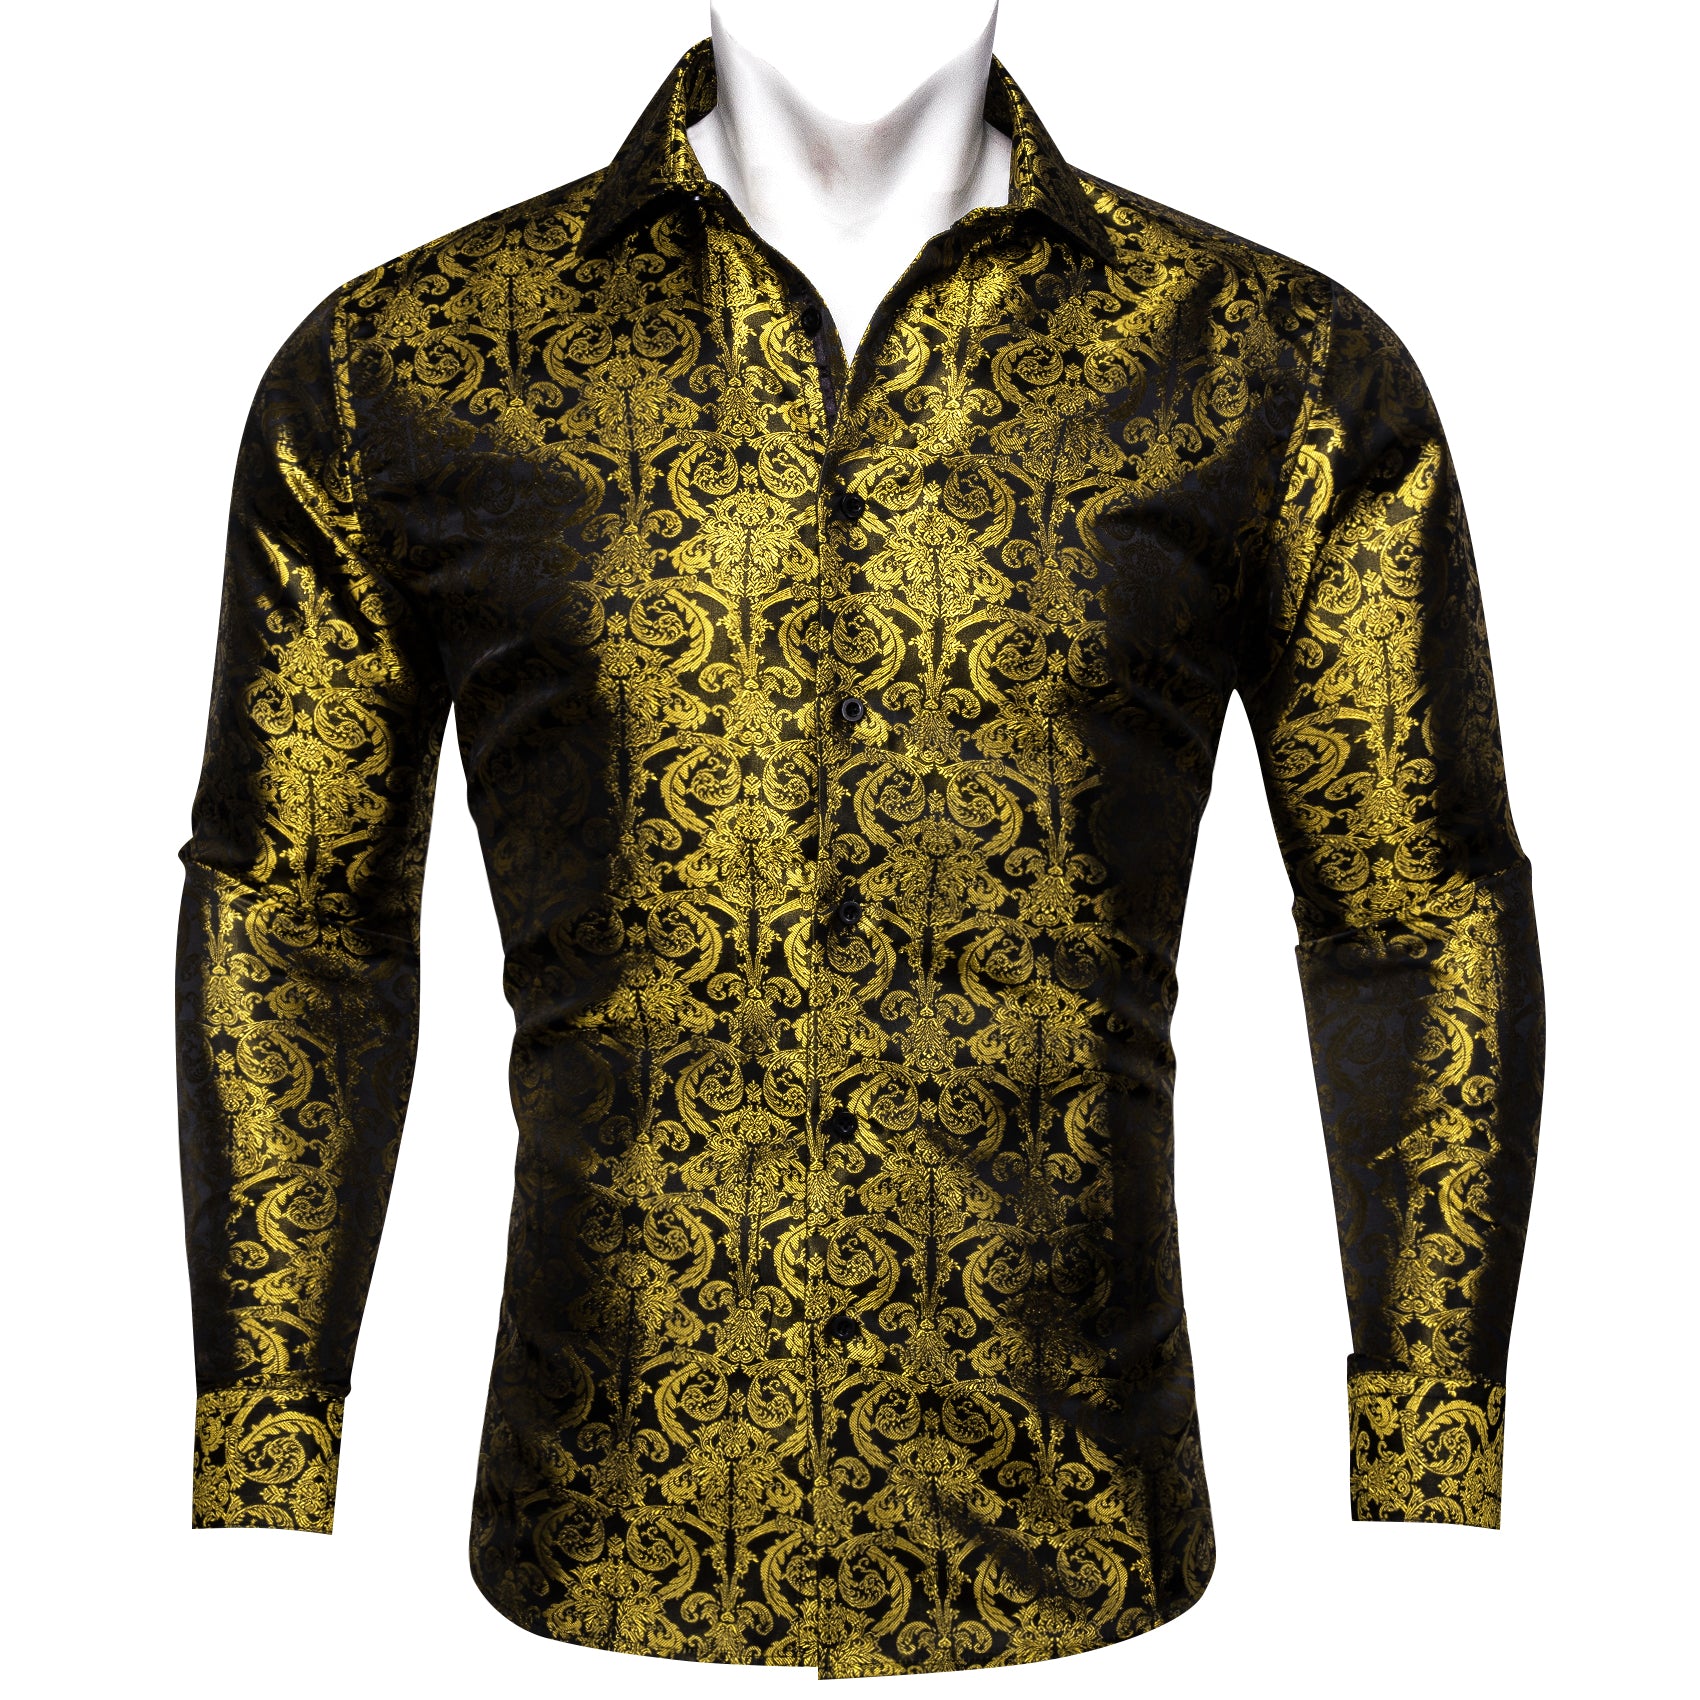 Barry.wang Long Sleeve Shirt Luxury Olive Green Paisley Silk Shirt